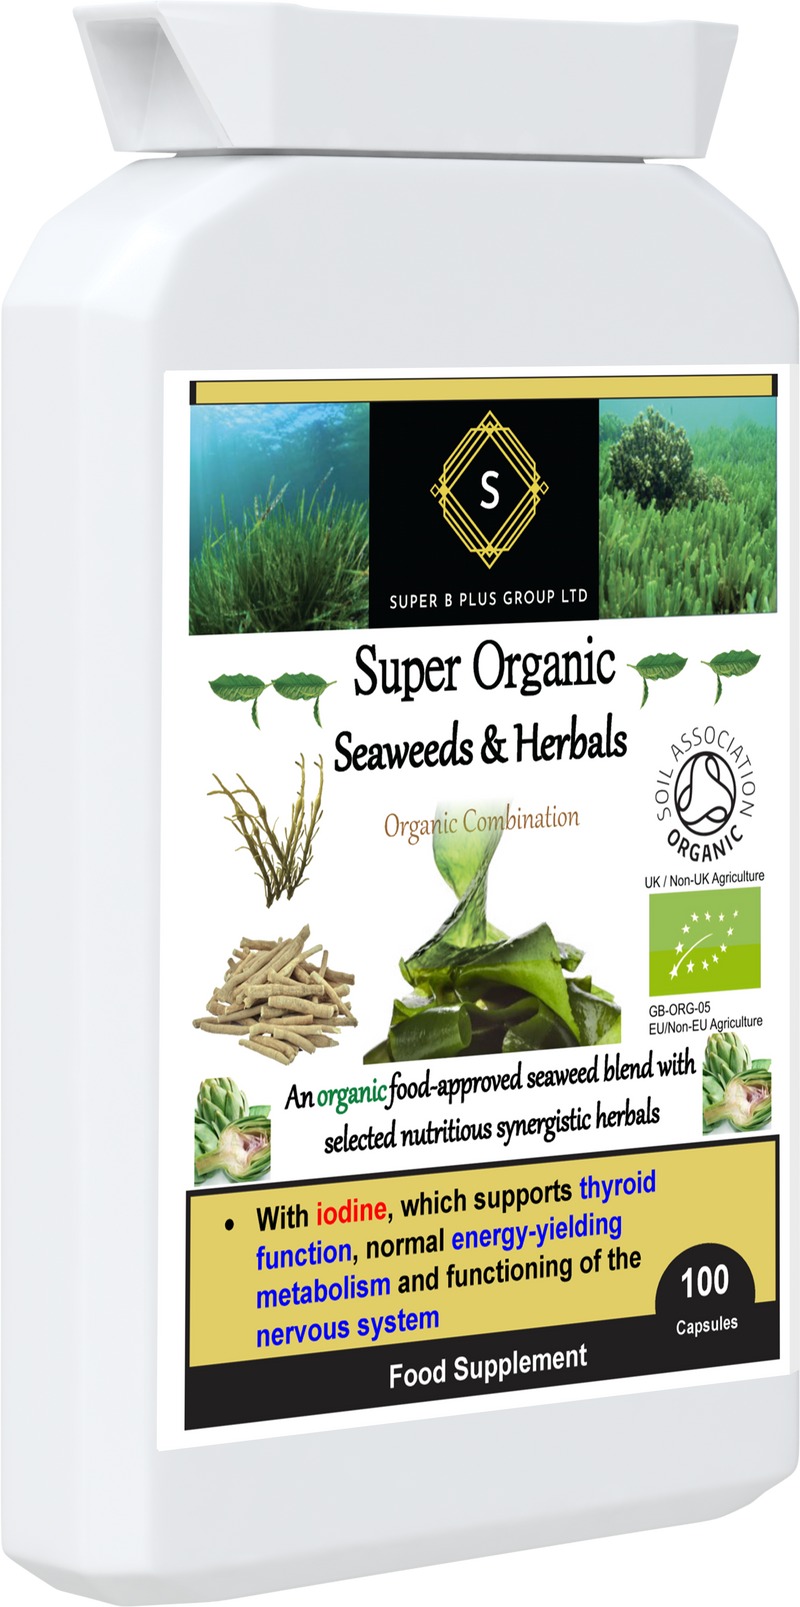 Super Organic Seaweeds & Herbals